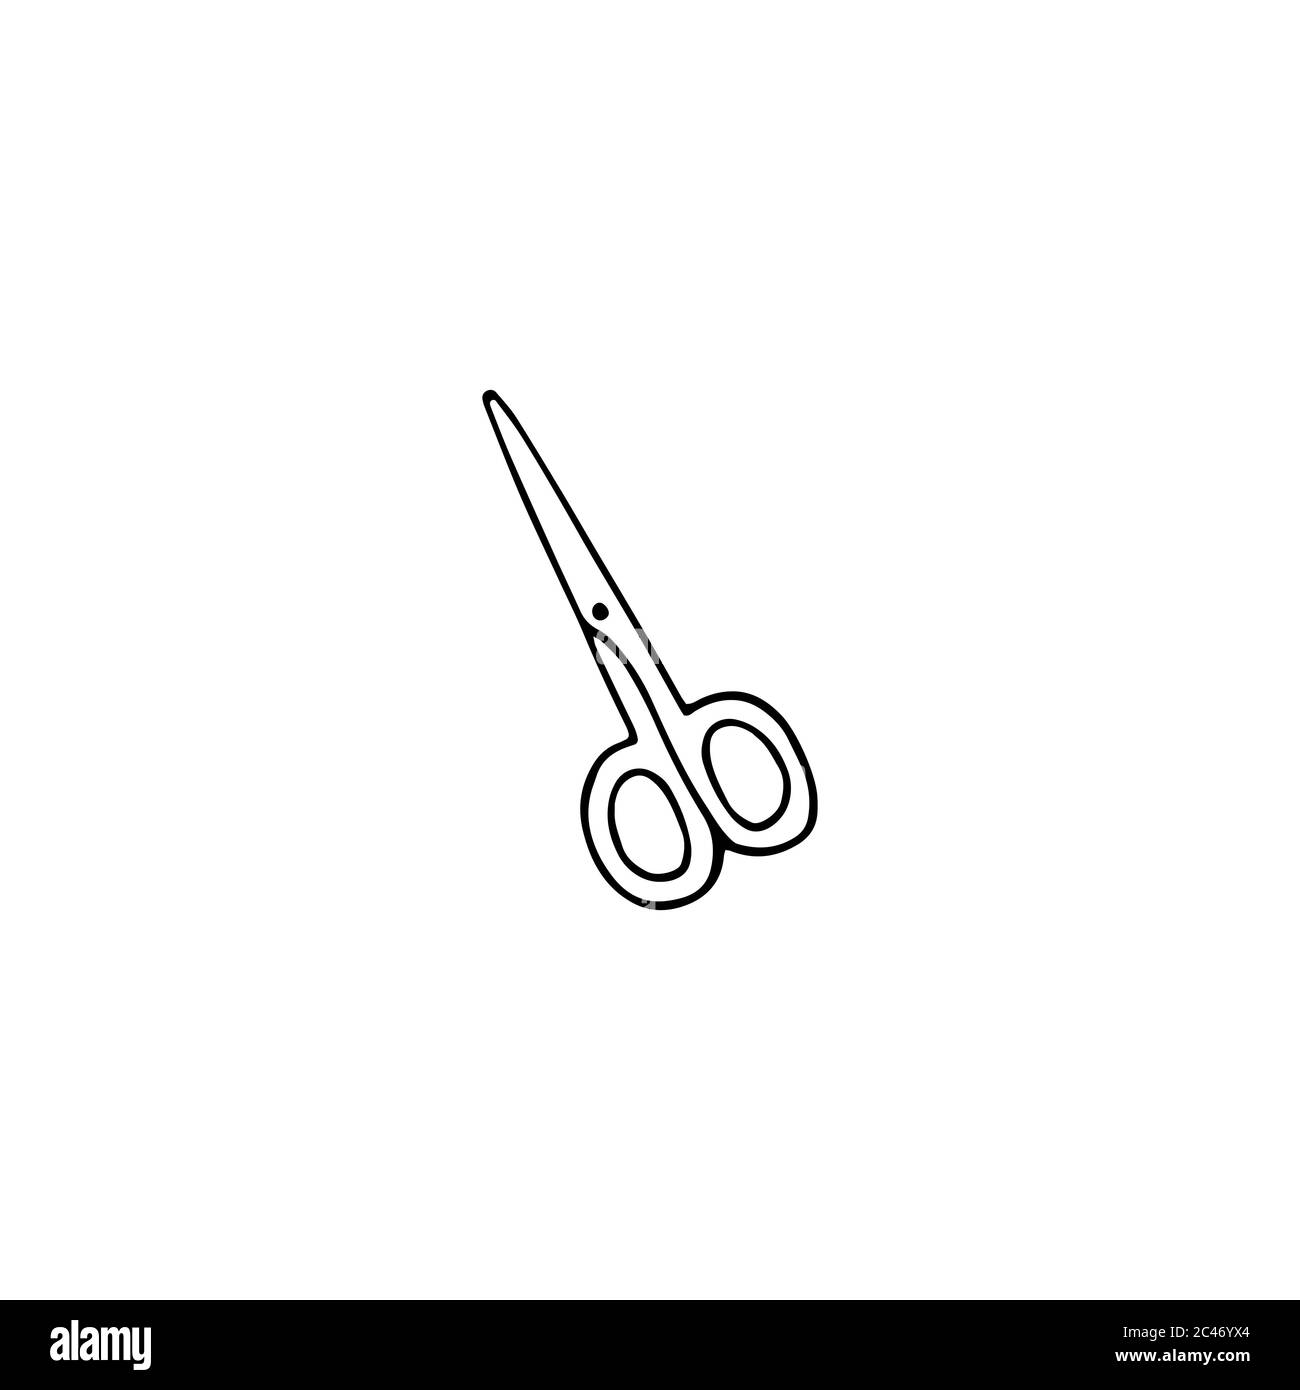 Scissors icon. Hand drawn doodle vector illustration. Stock Vector